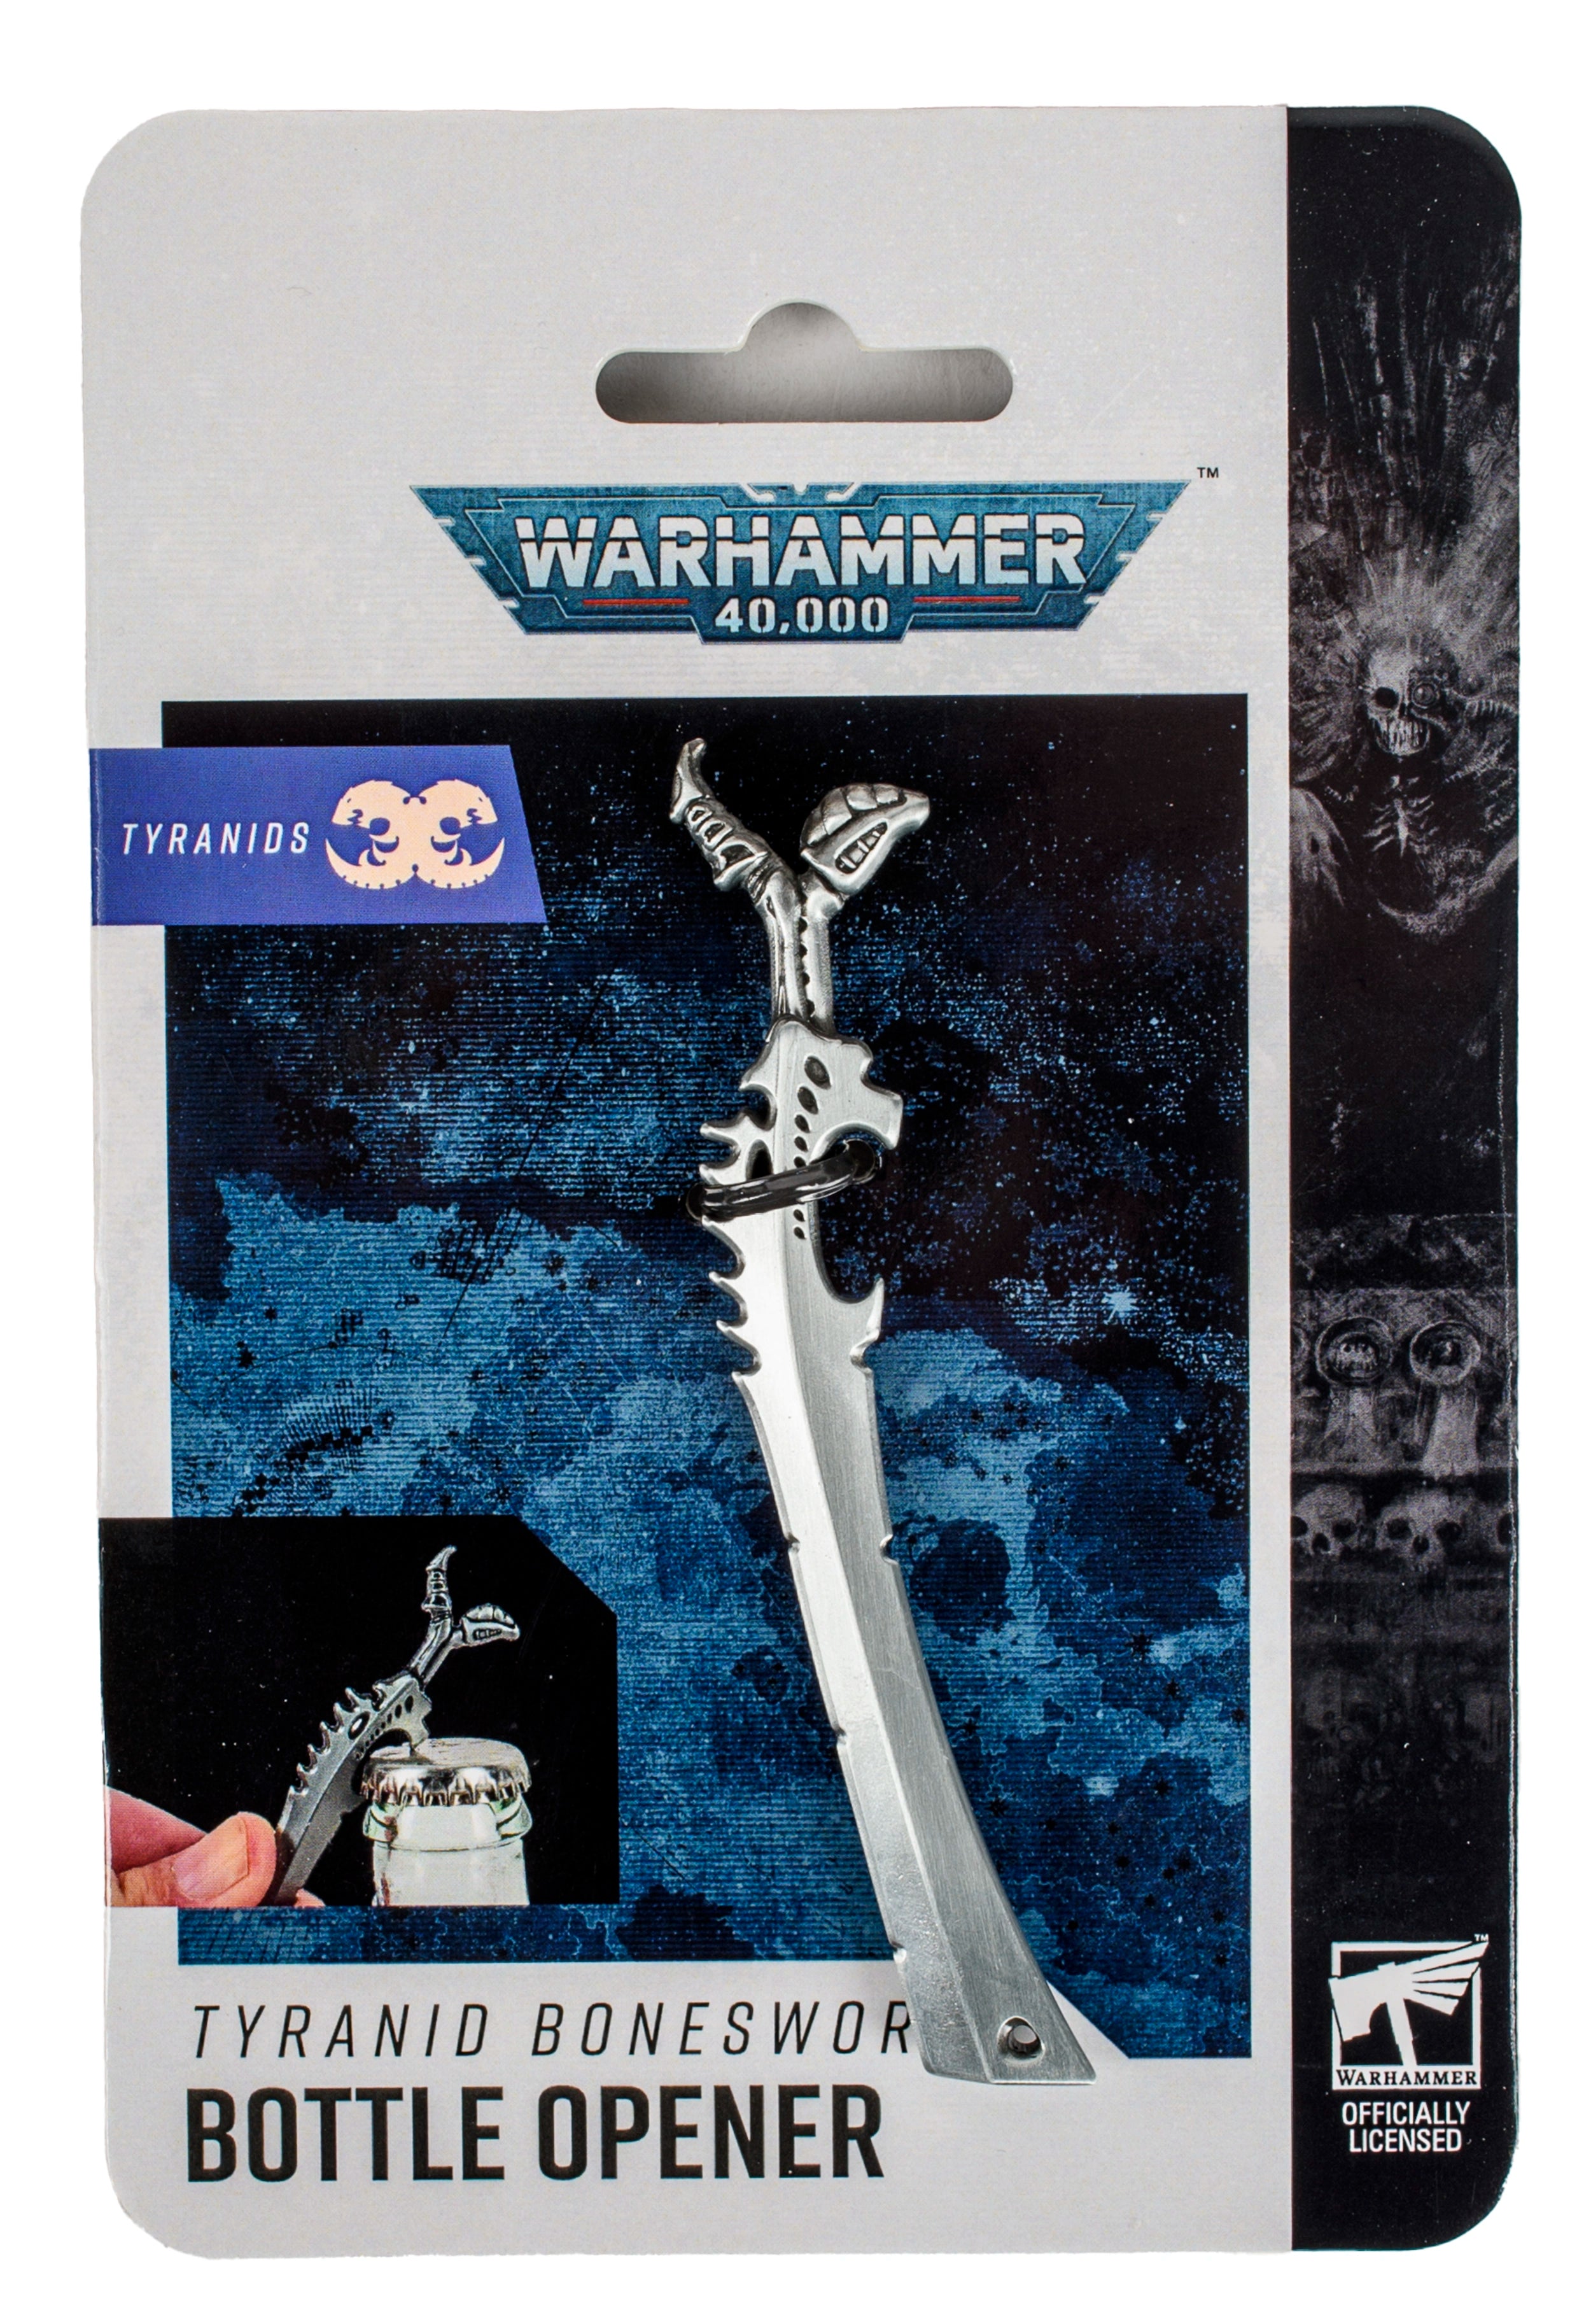 Warhammer 40,000: Tyranids Bonesword Bottle Opener [PRE ORDER] - Loaded Dice